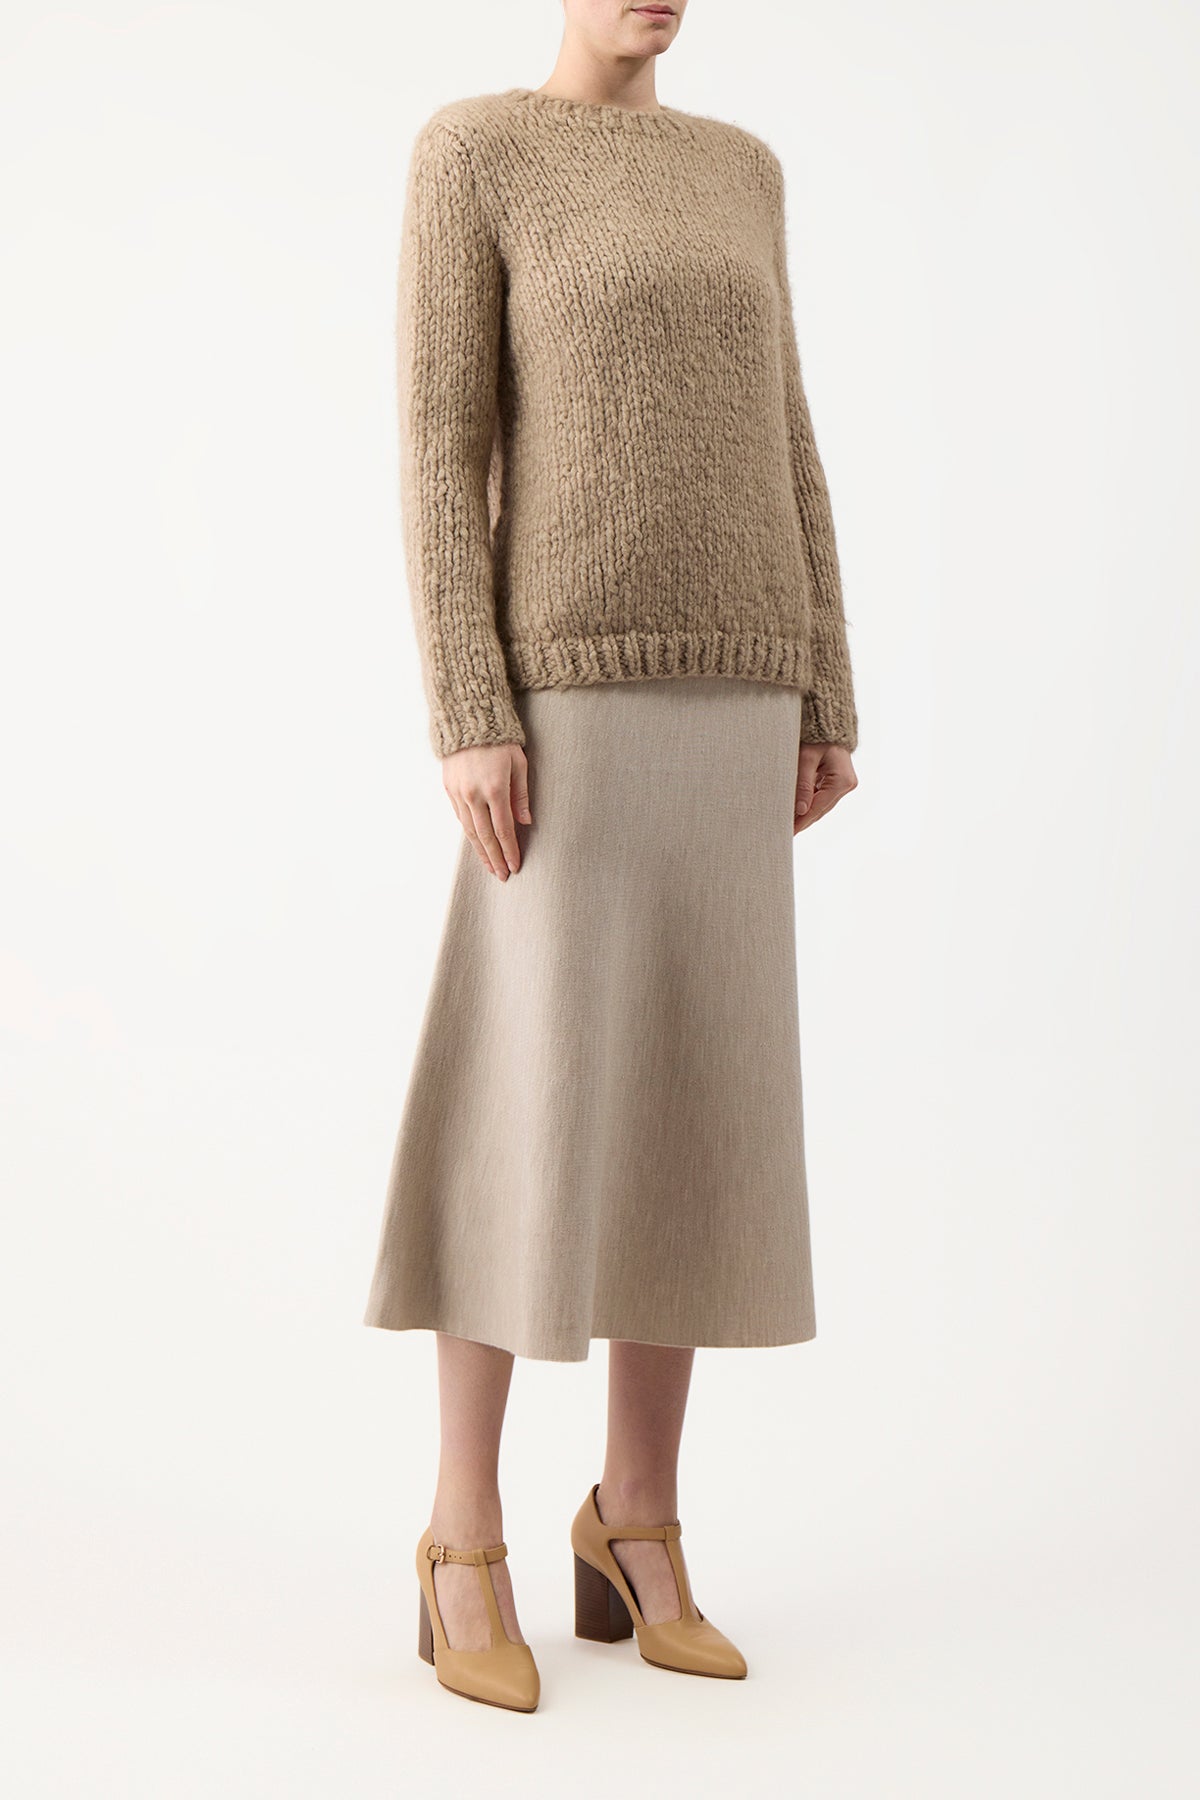 Freddie Knit Skirt in Oatmeal Cashmere Wool